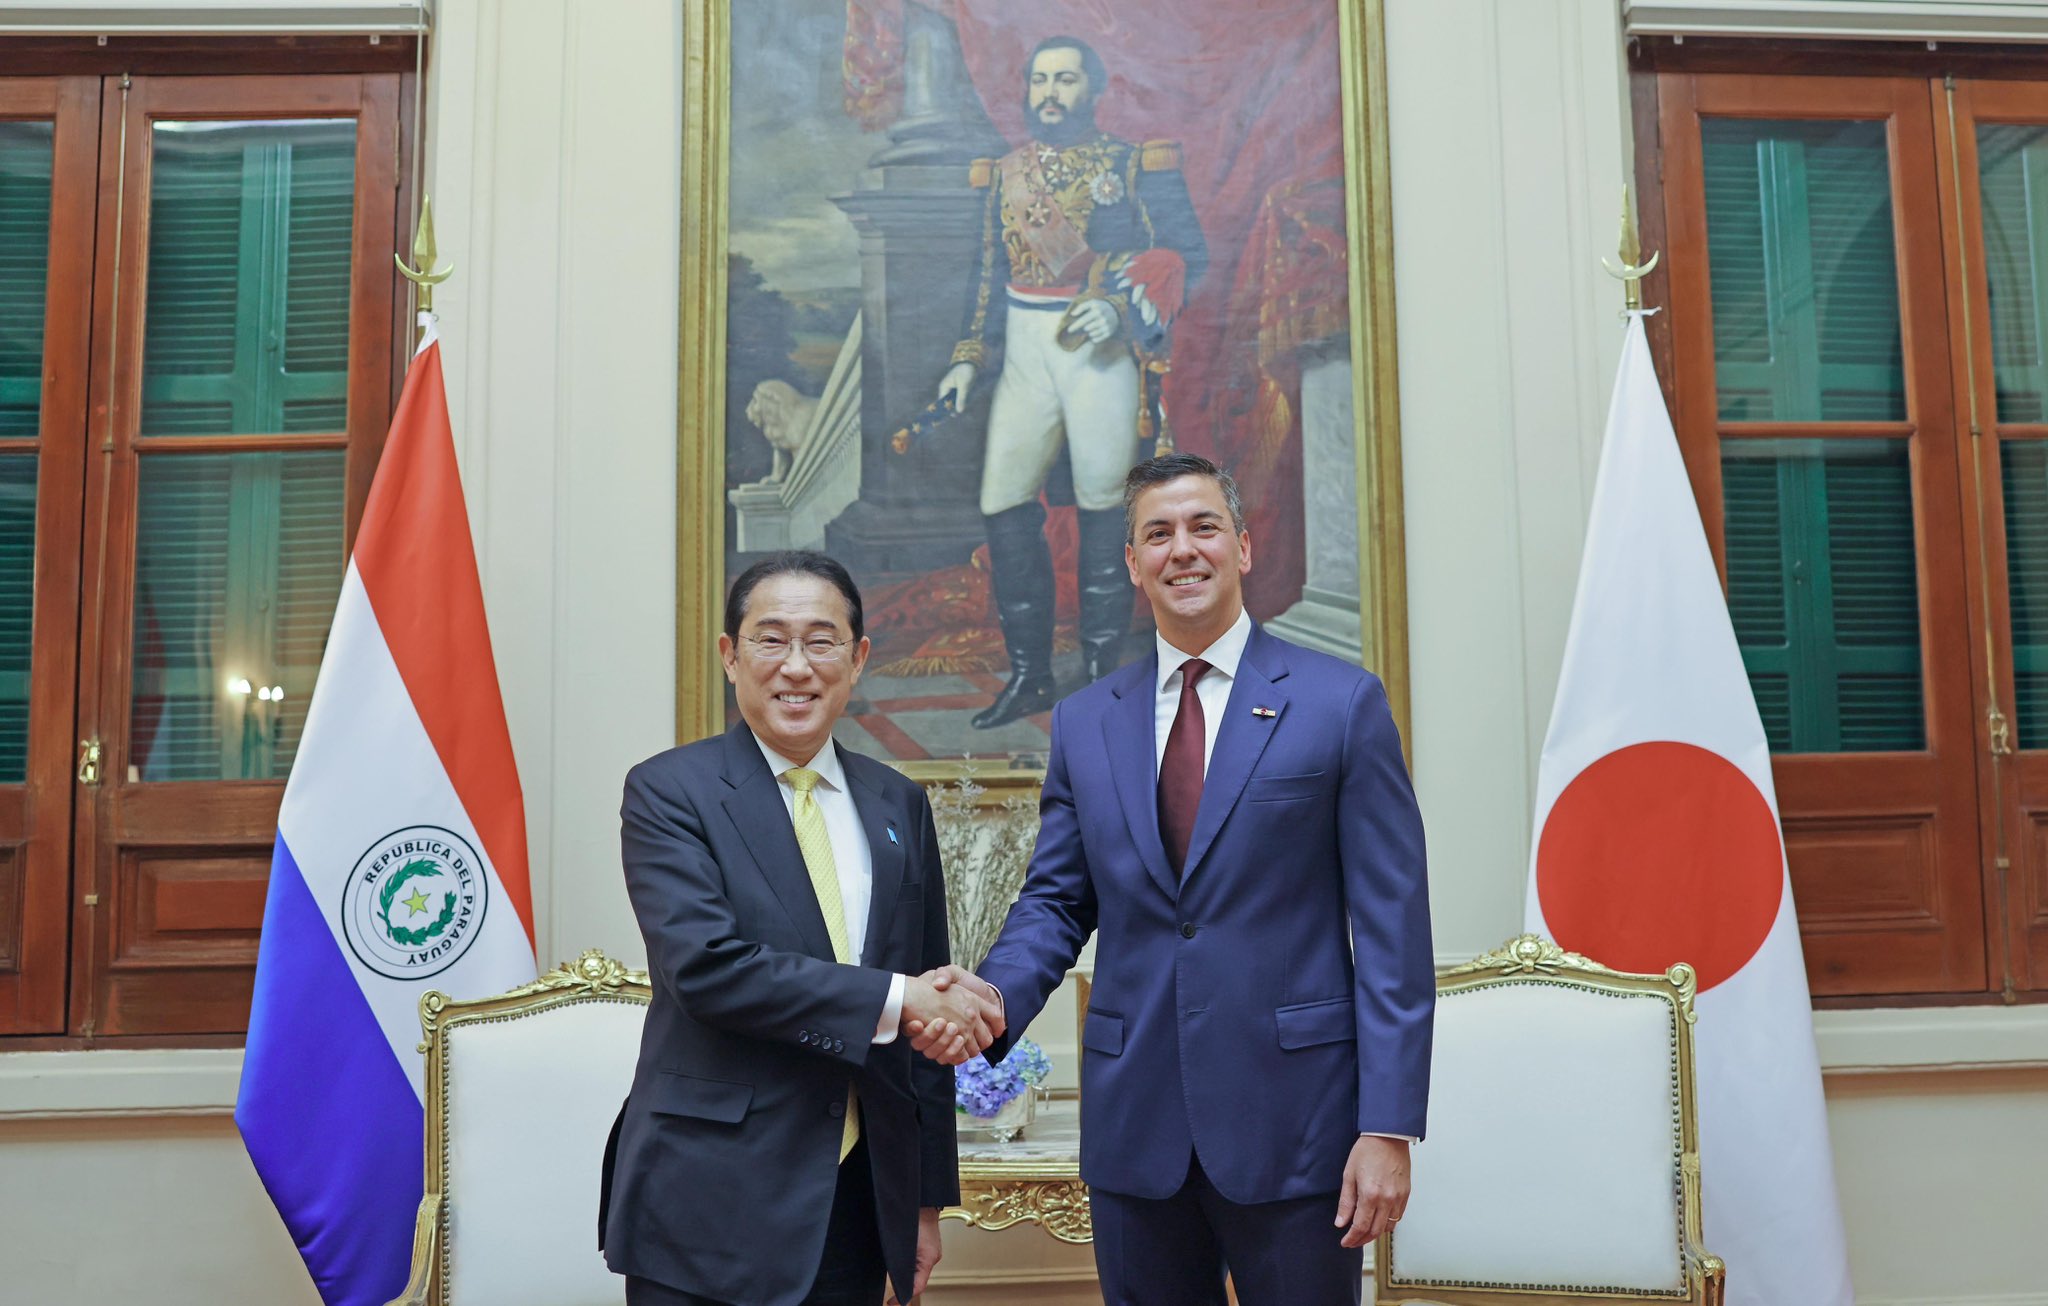 Primer ministro de Japón llega a Paraguay para profundizar lazos